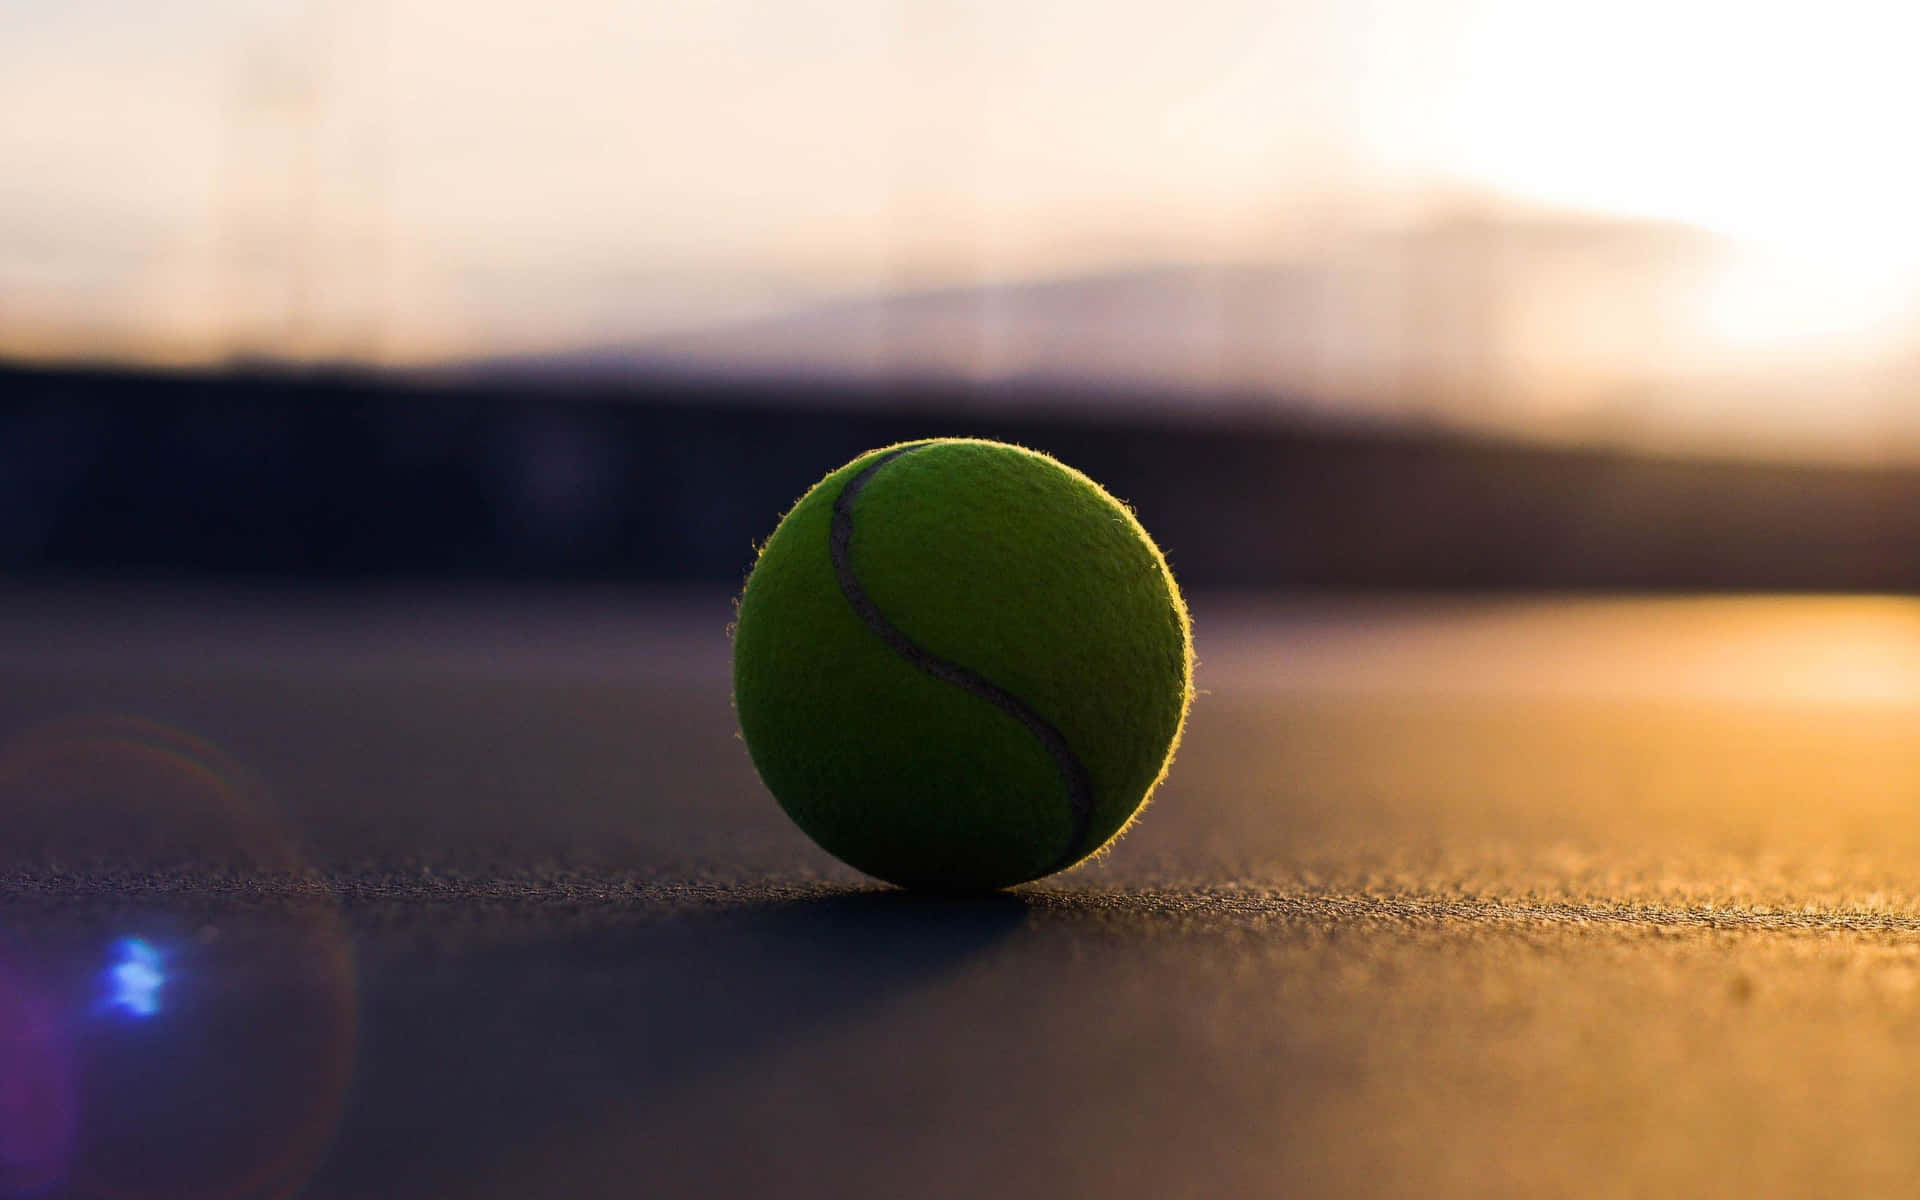 A Fresh Tennis Ball Lying on a Grass Field Ready for Play Wallpaper